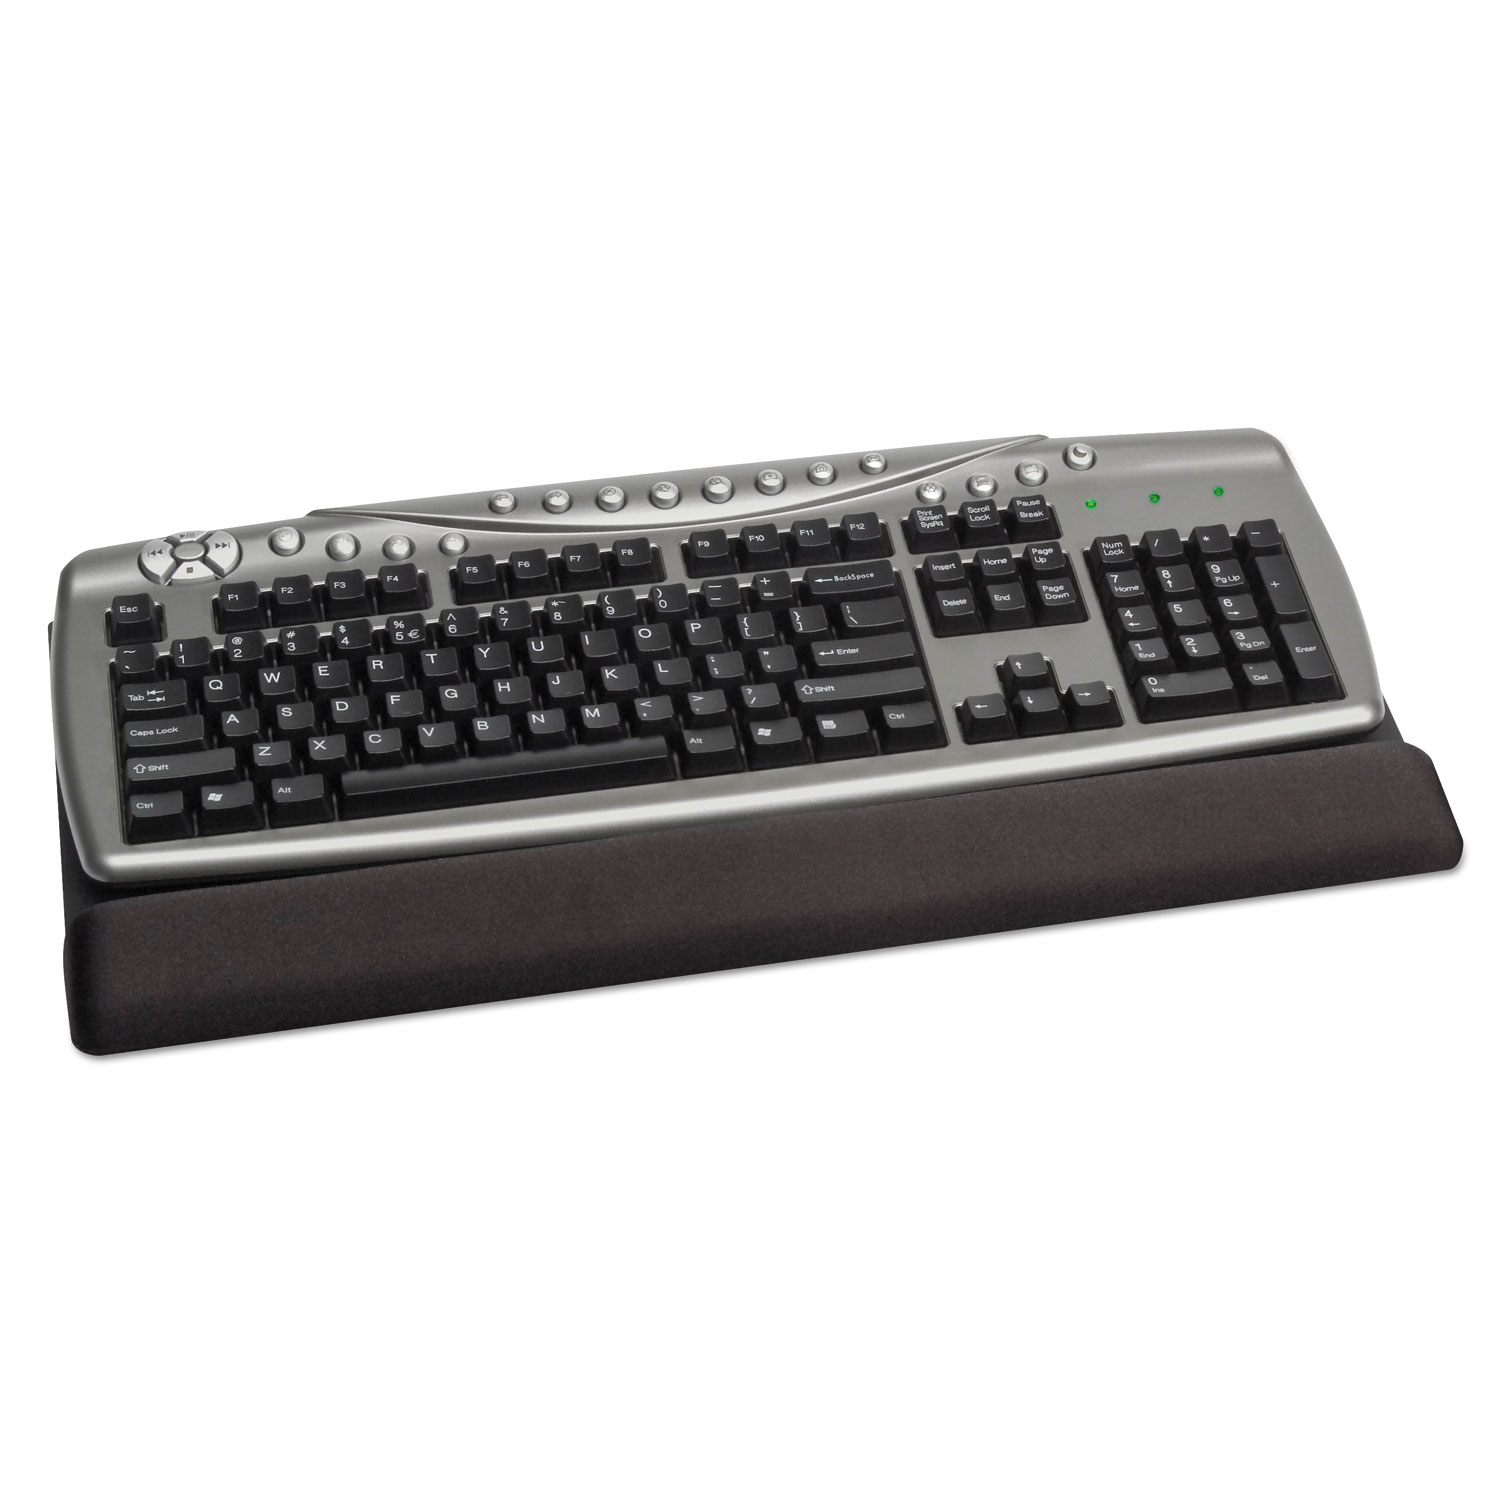 Keyboard Wrist Rest, Memory Foam, Non-Skid Base, 19 x 10-1/2 x 1, Black